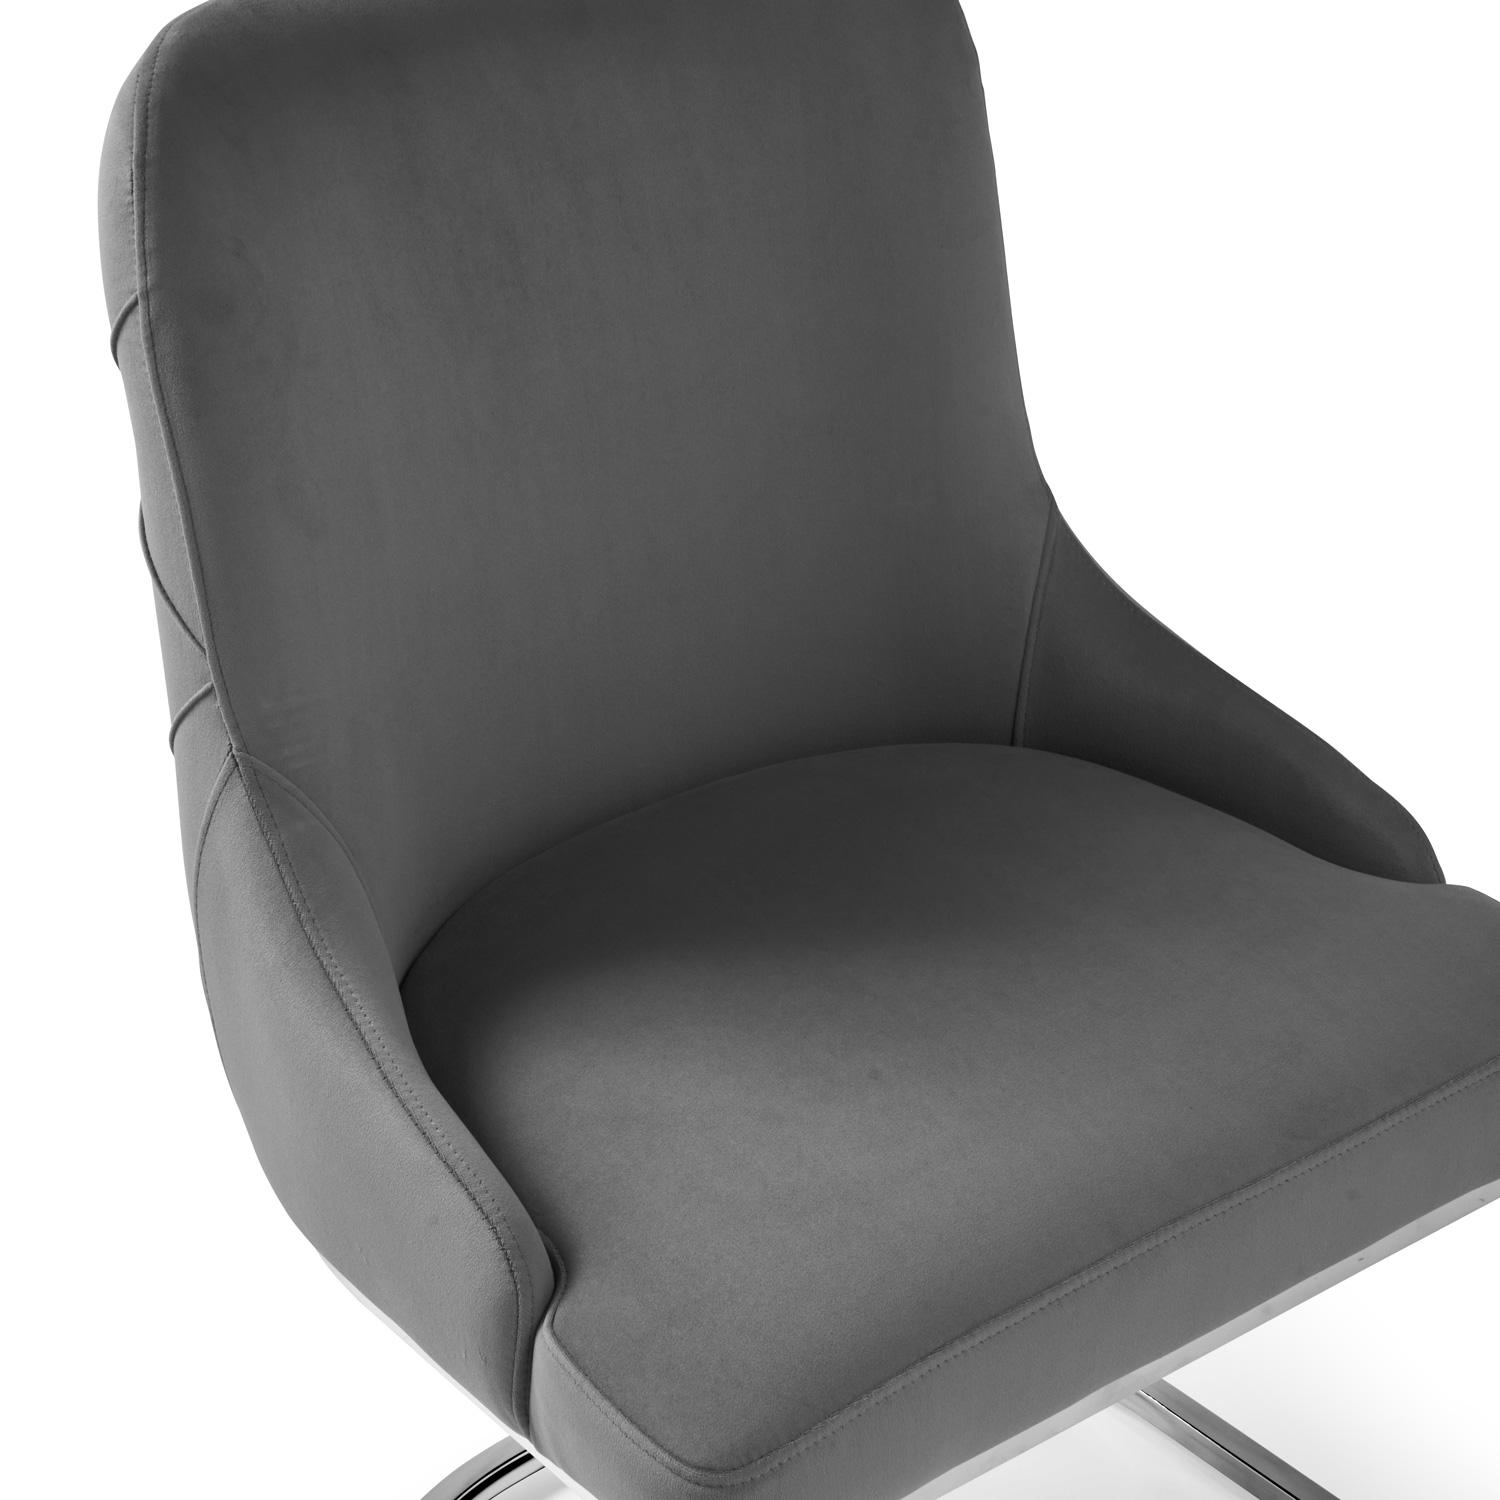 Clara Grey Brushed Velvet Upholstered Dining Chair – Polished Stainless Steel Base